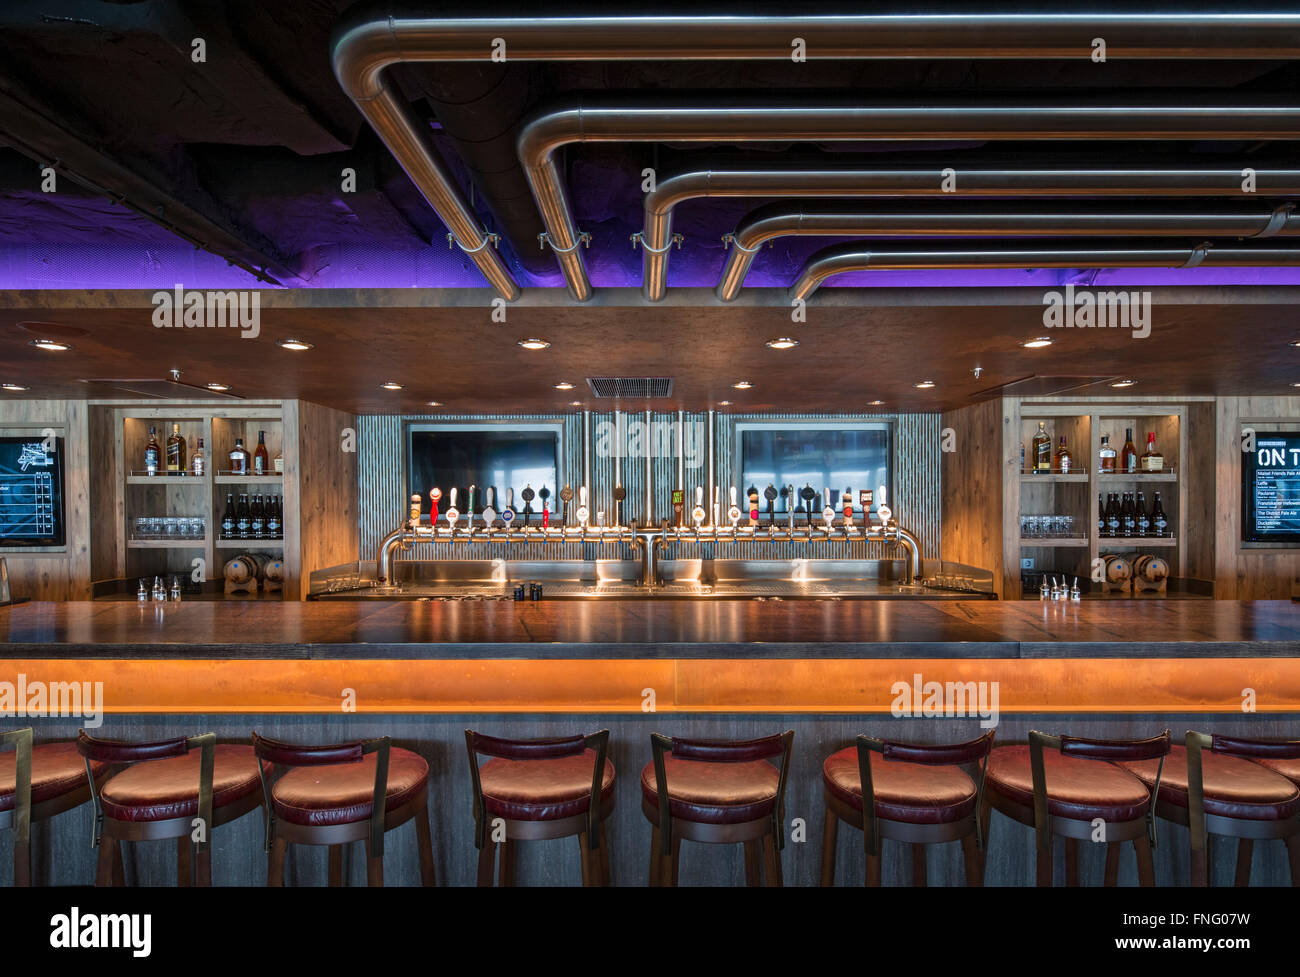 Bar in micro-brewery bar. Norwegian Cruise Ship – The Escape, Southampton, United Kingdom. Architect: SMC Design, 2015. Stock Photo